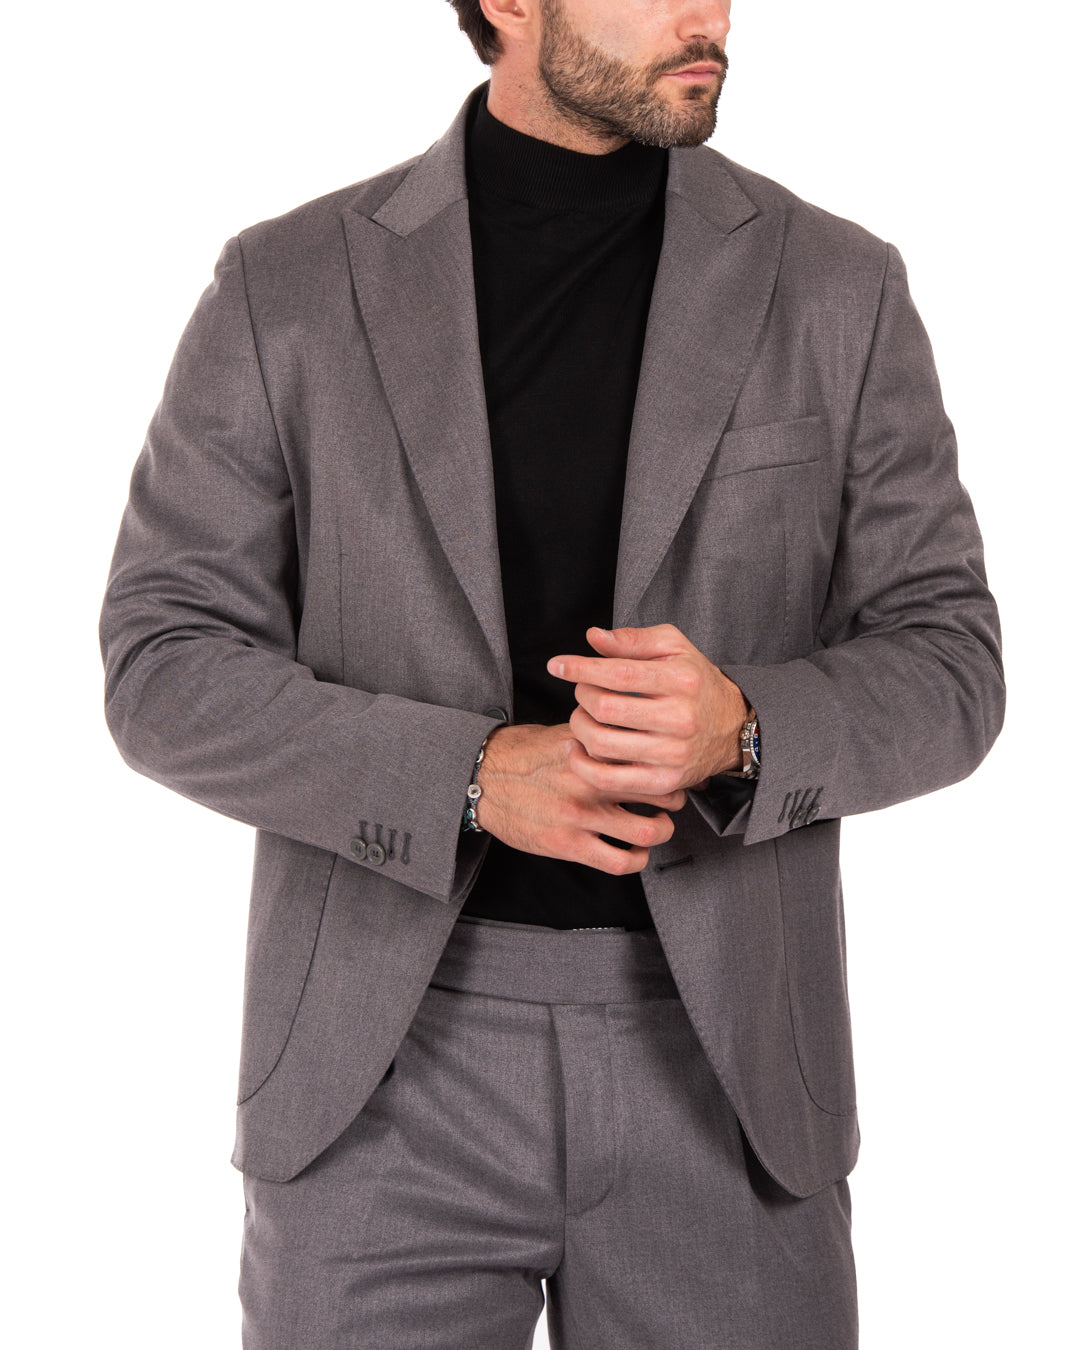 Bond - gray double stitched jacket